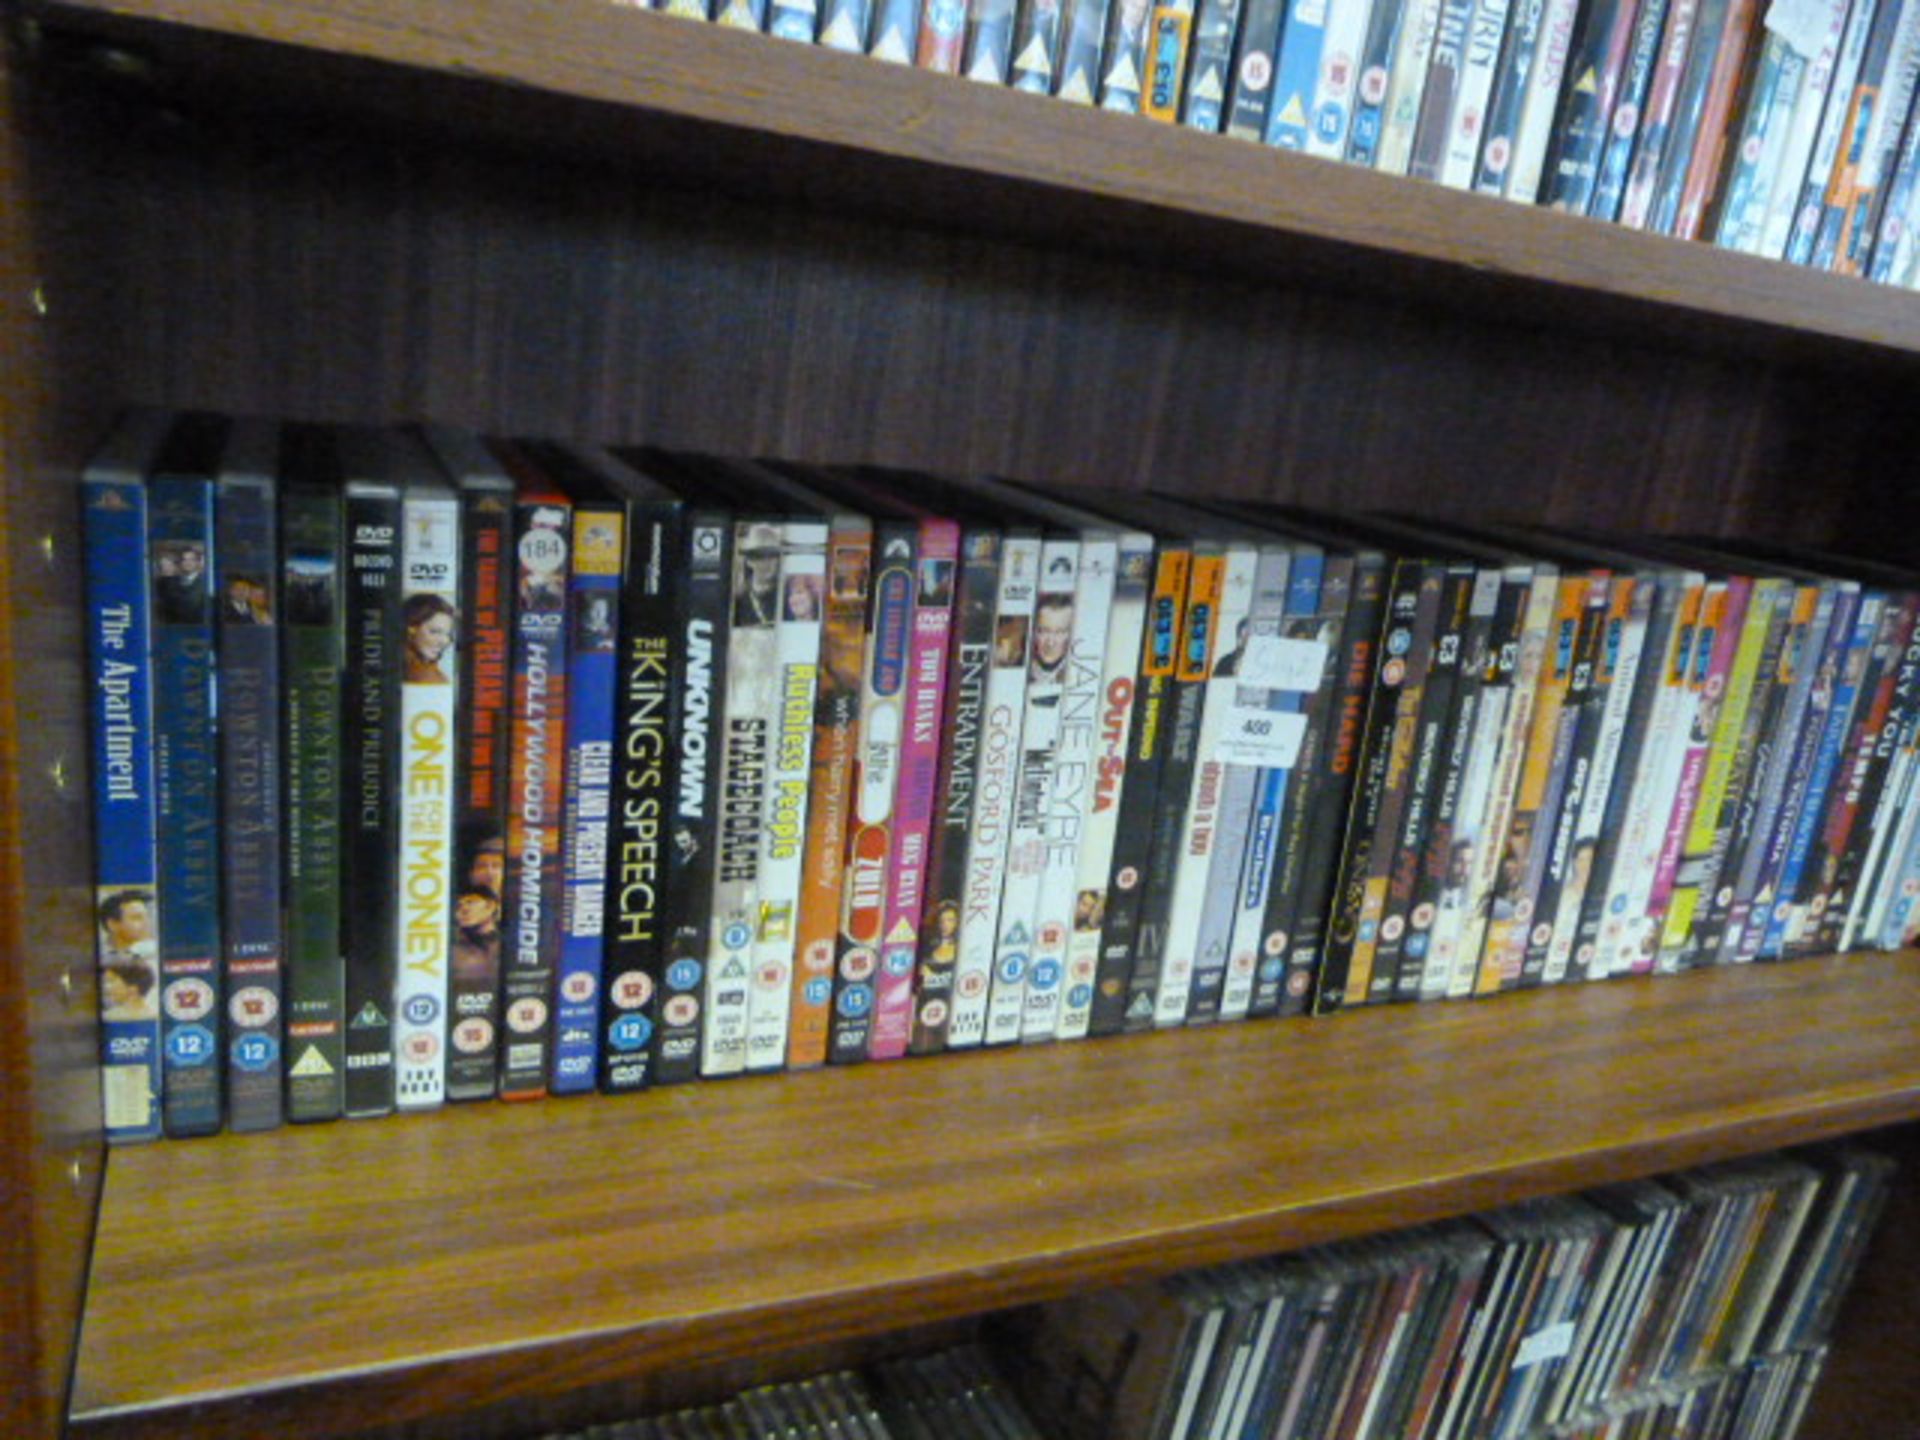 Quantity of DVDs